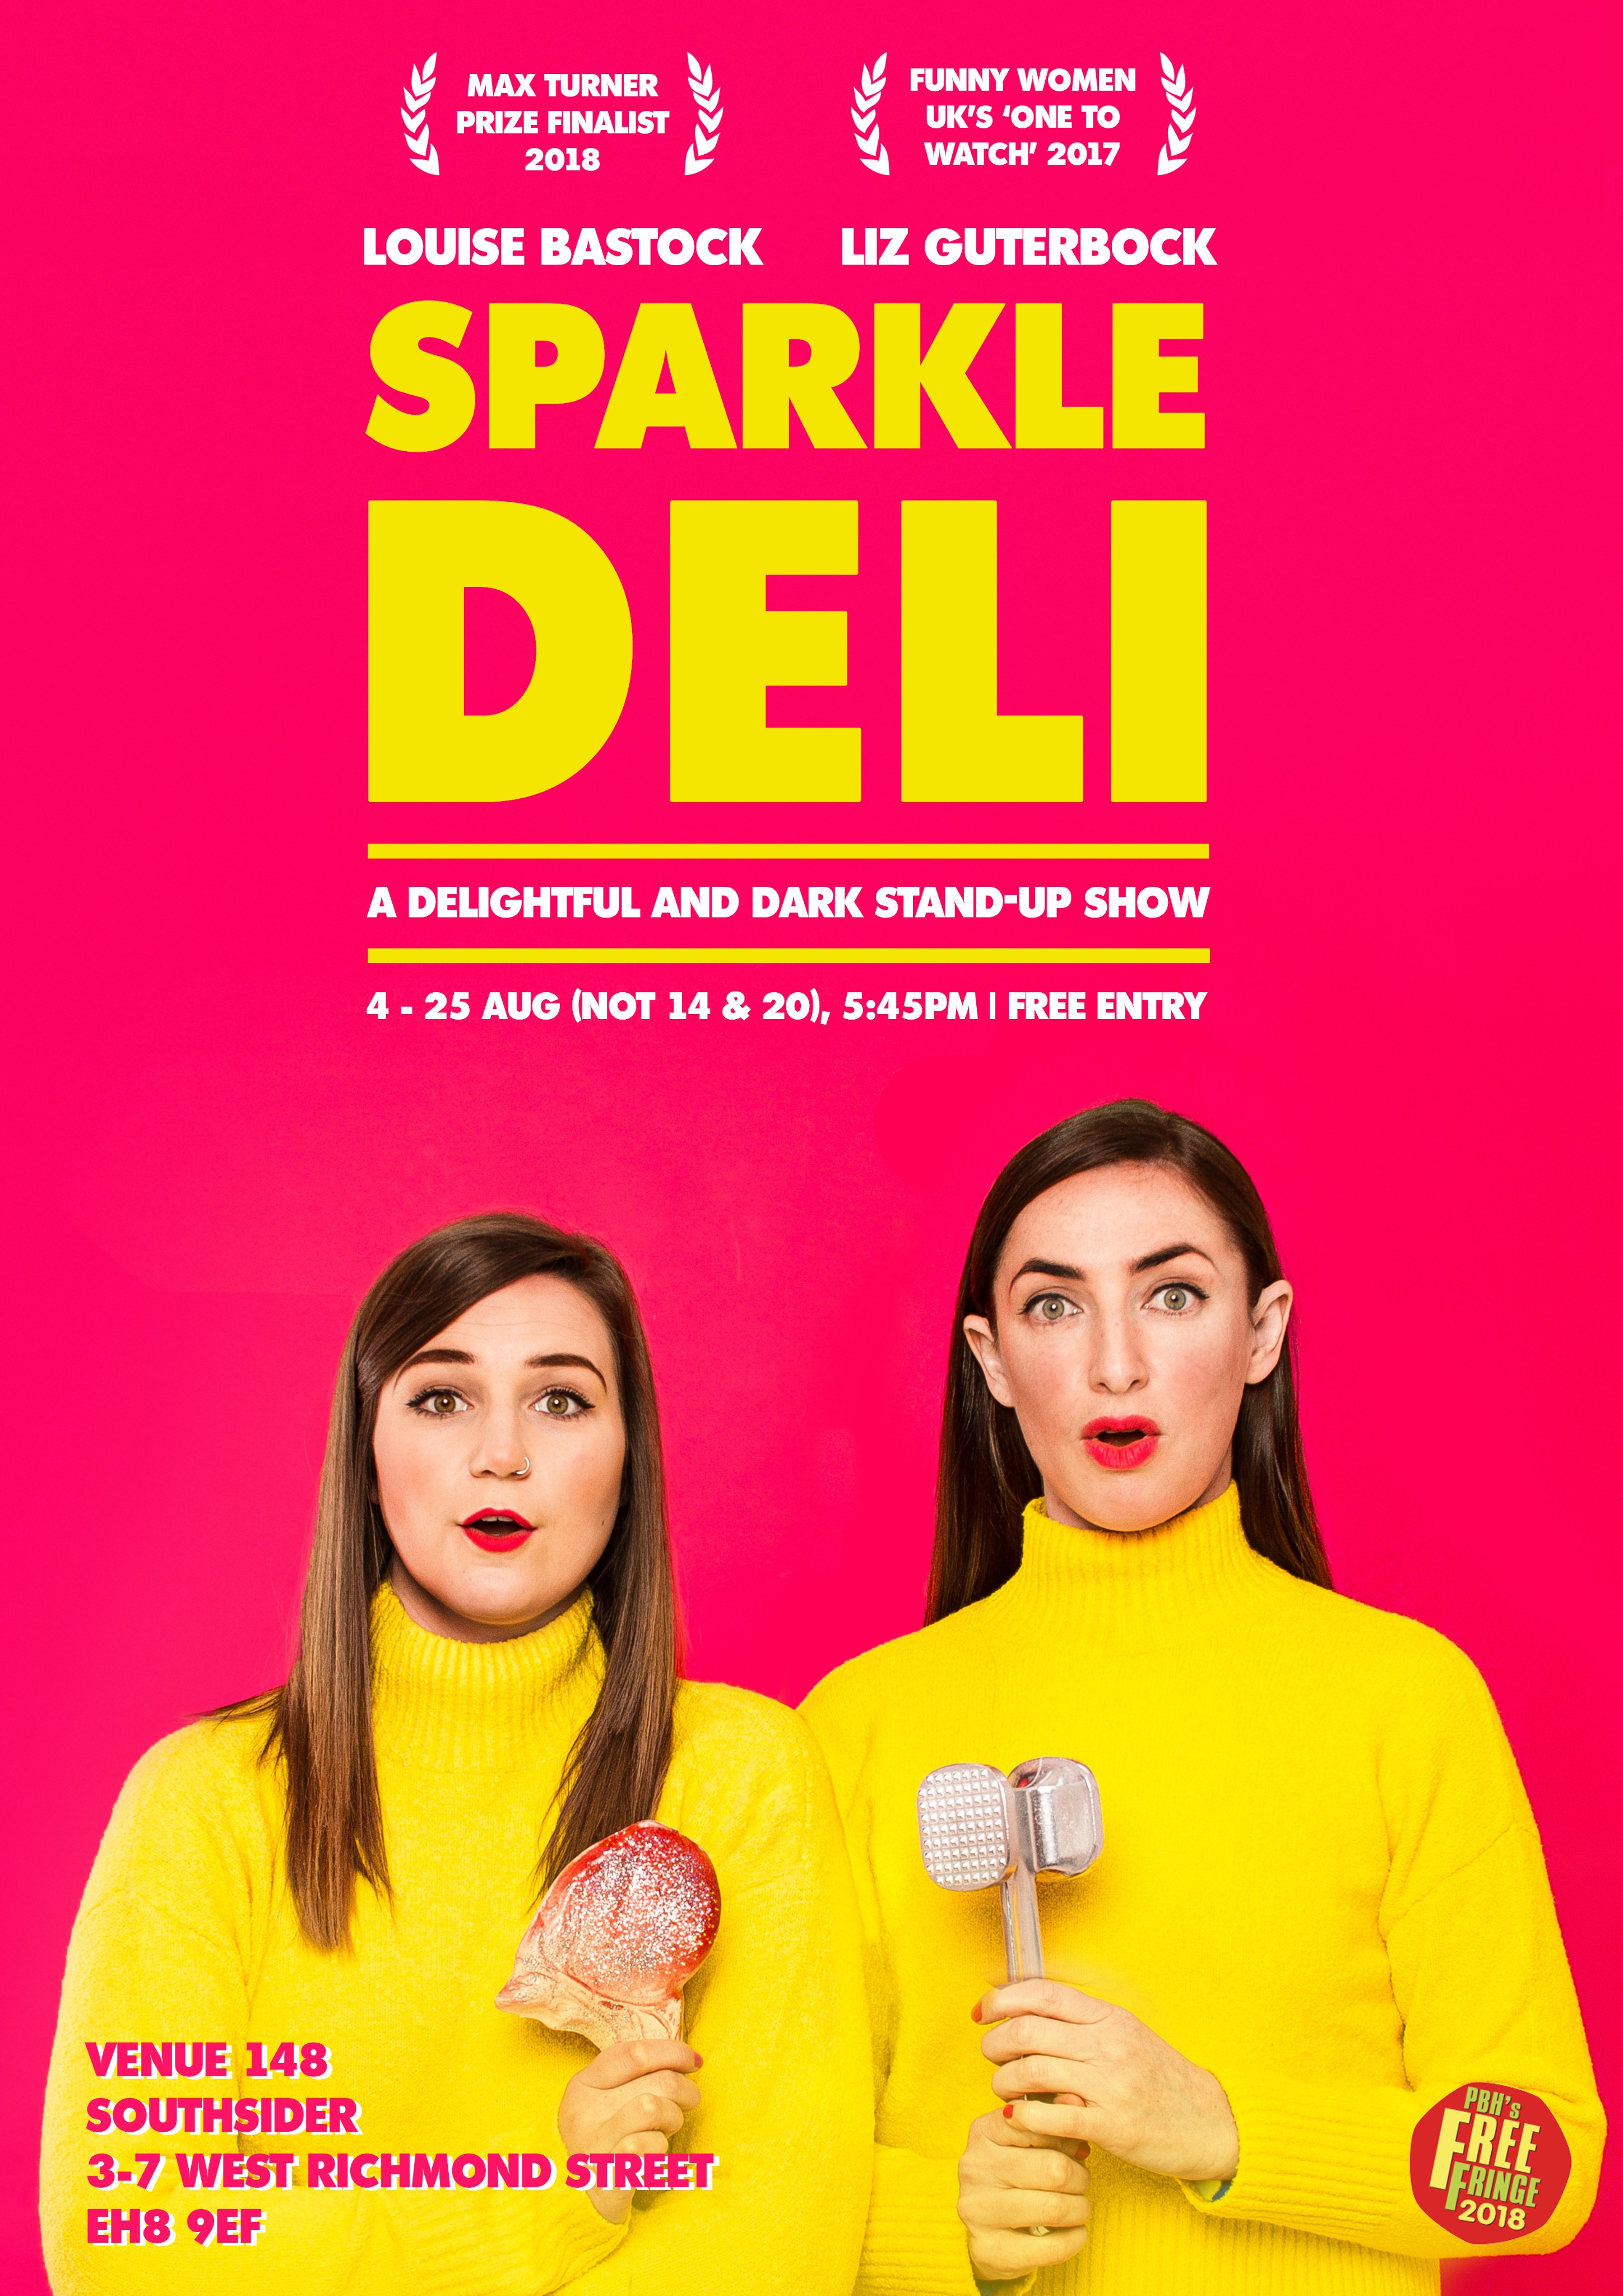 The poster for Sparkle Deli